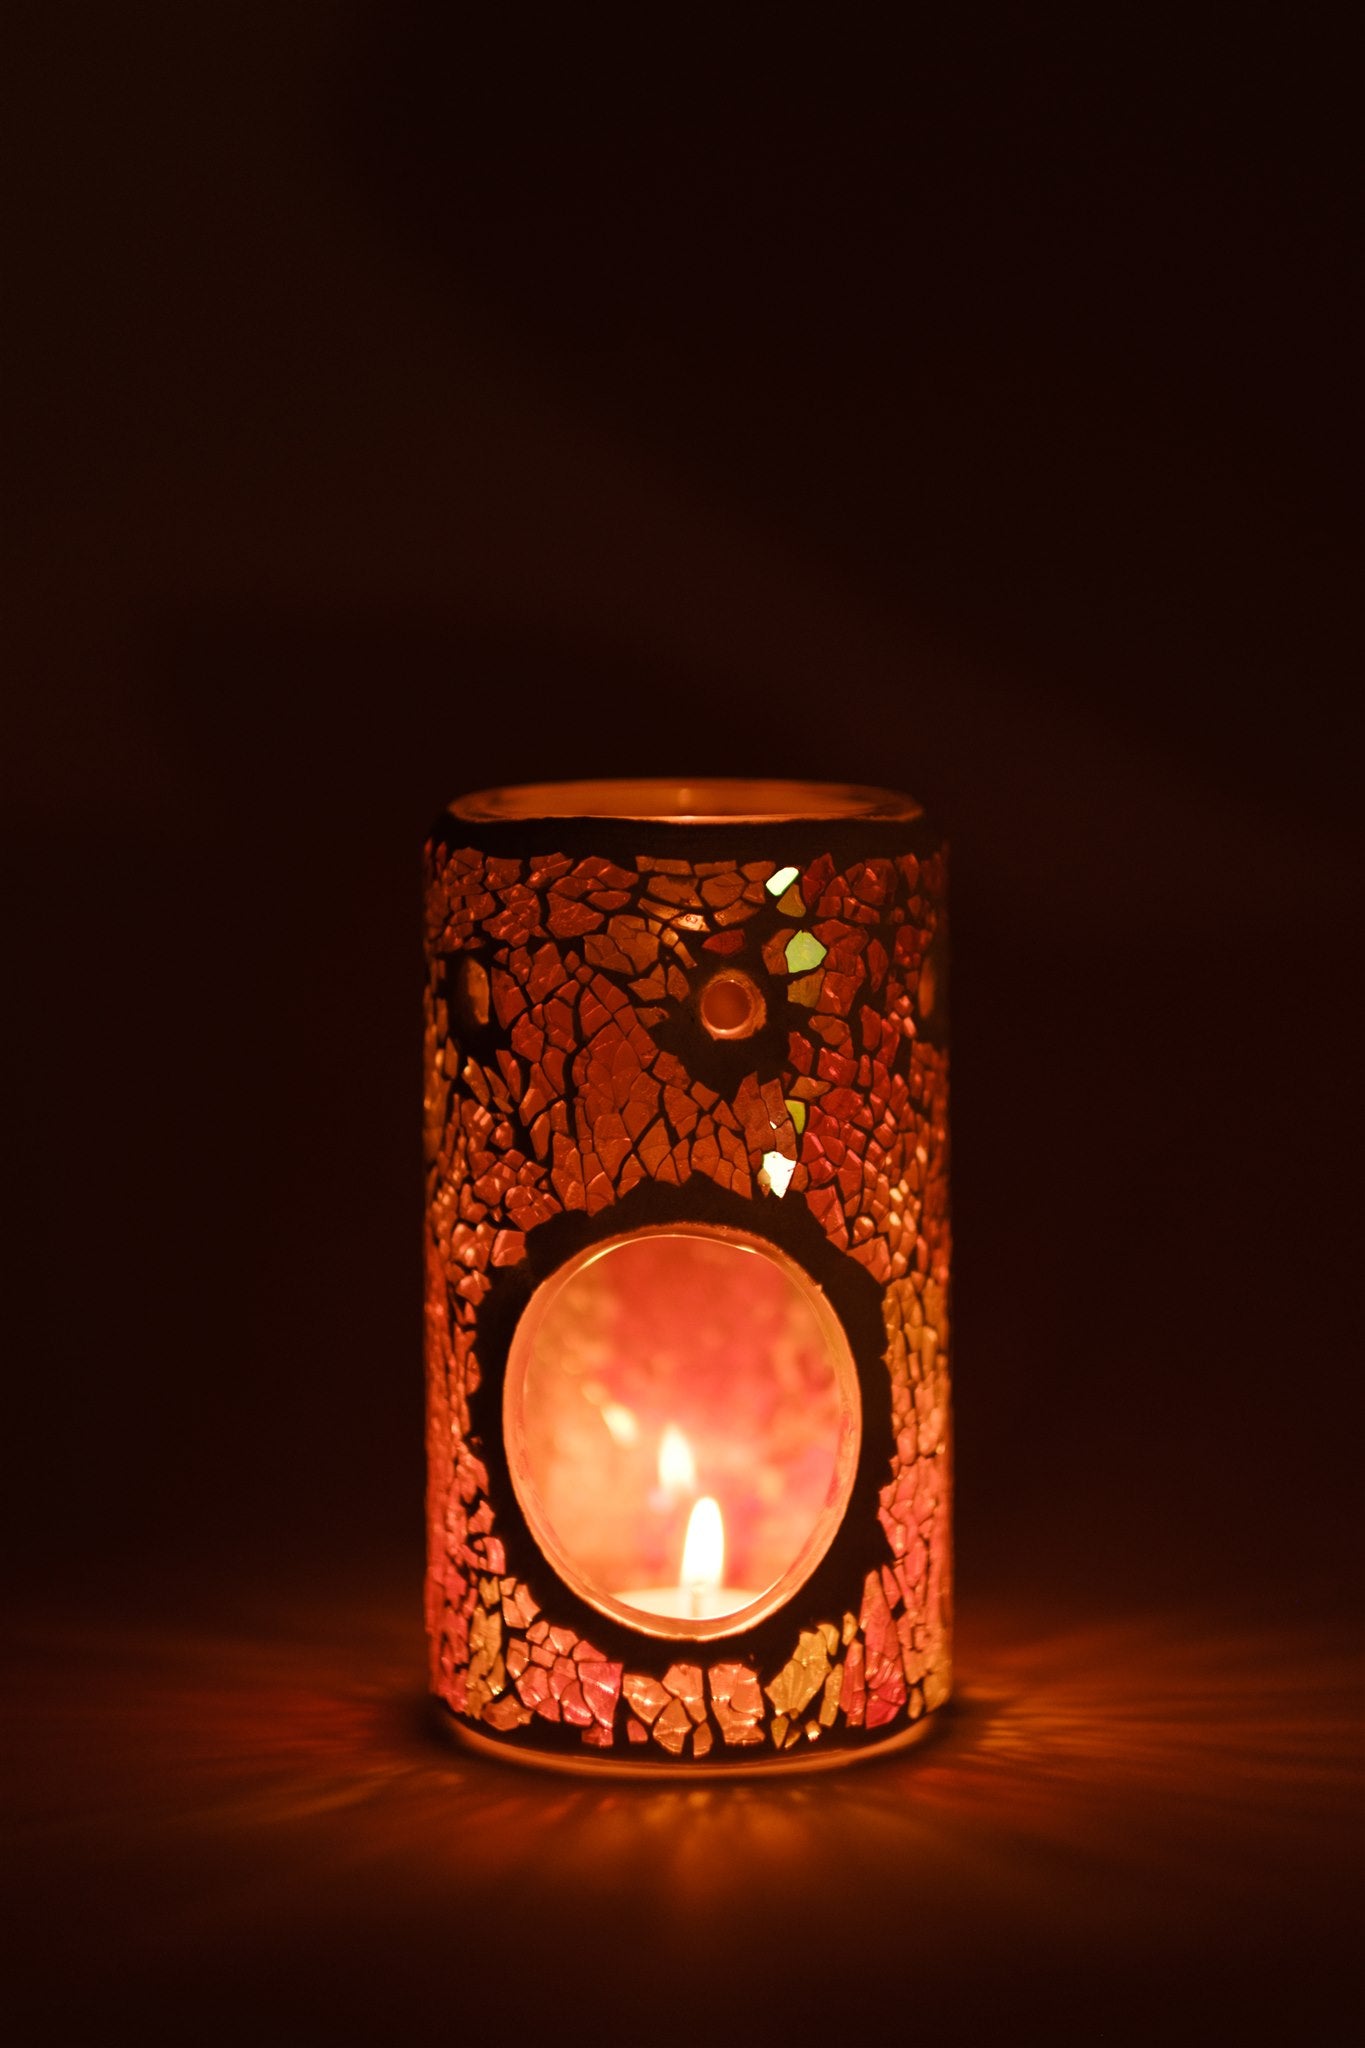 glass mosaic tea light burner pink with candle lit